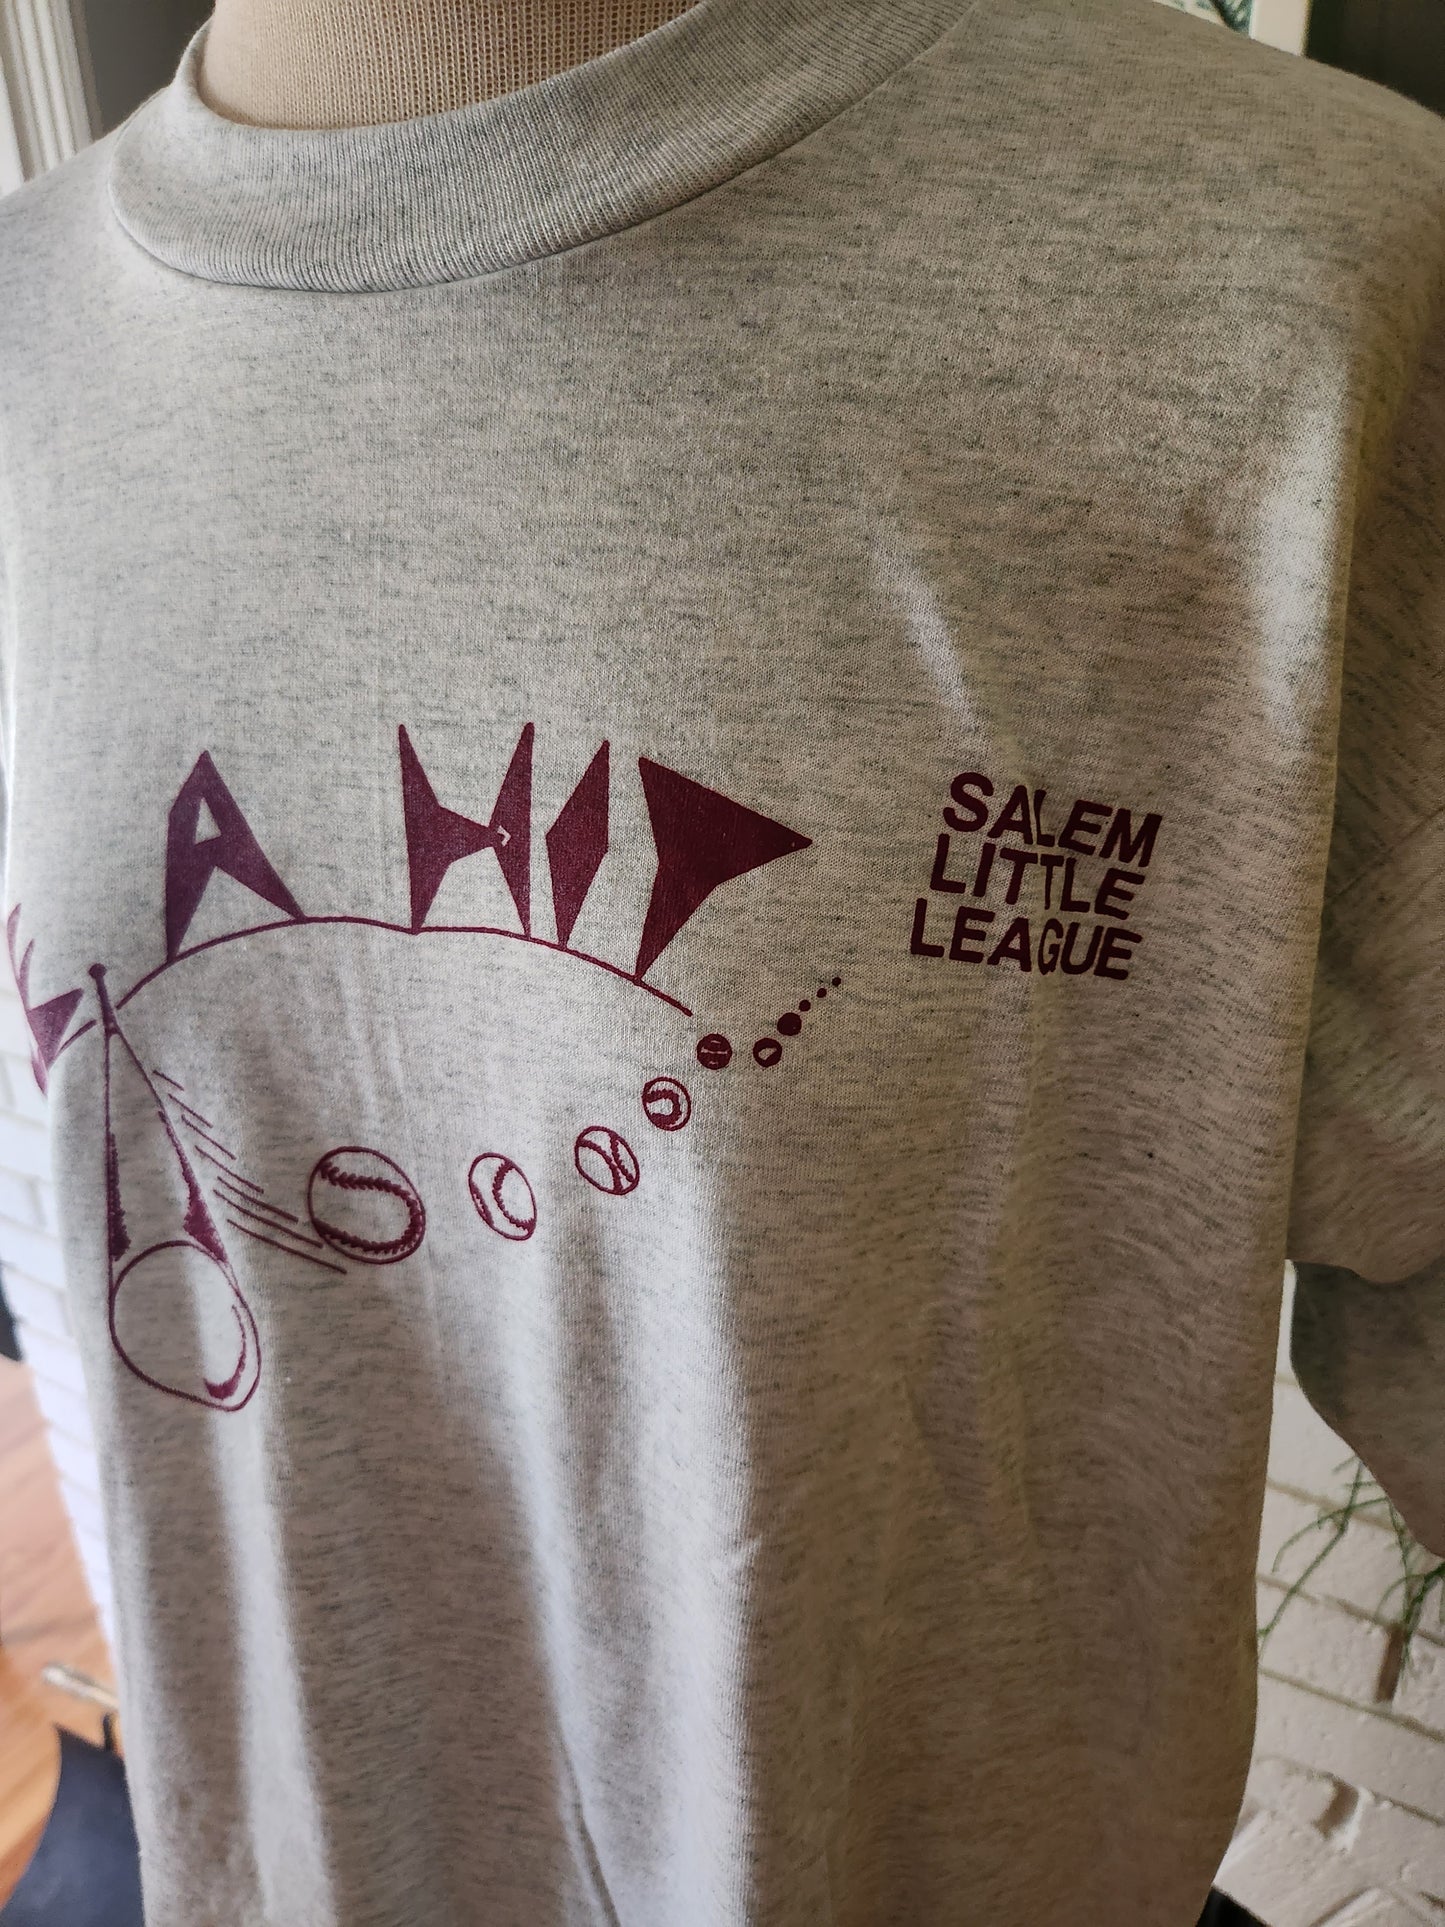 Vintage UNWORN Salem Little League T Shirt by Screen Stars Best